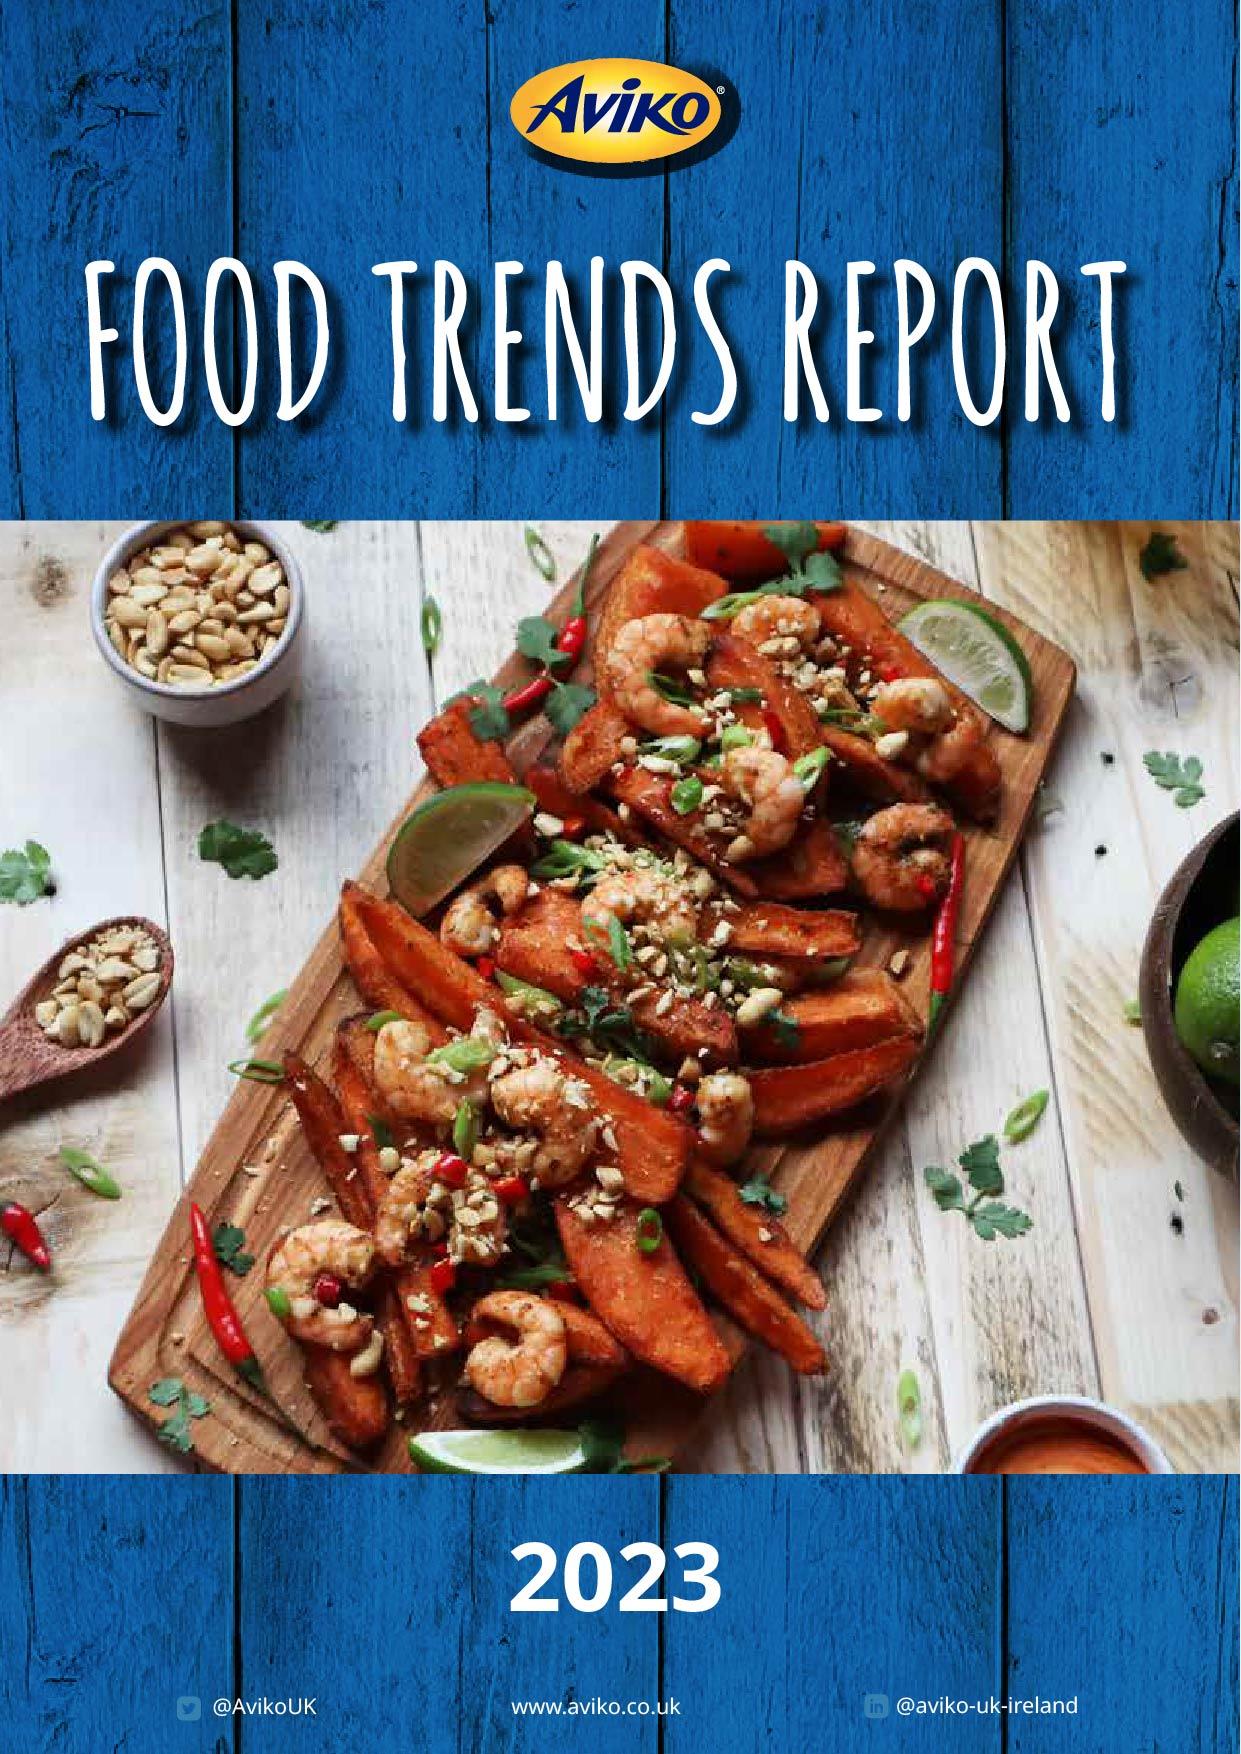 Food trends 2023-Aviko report.jpg